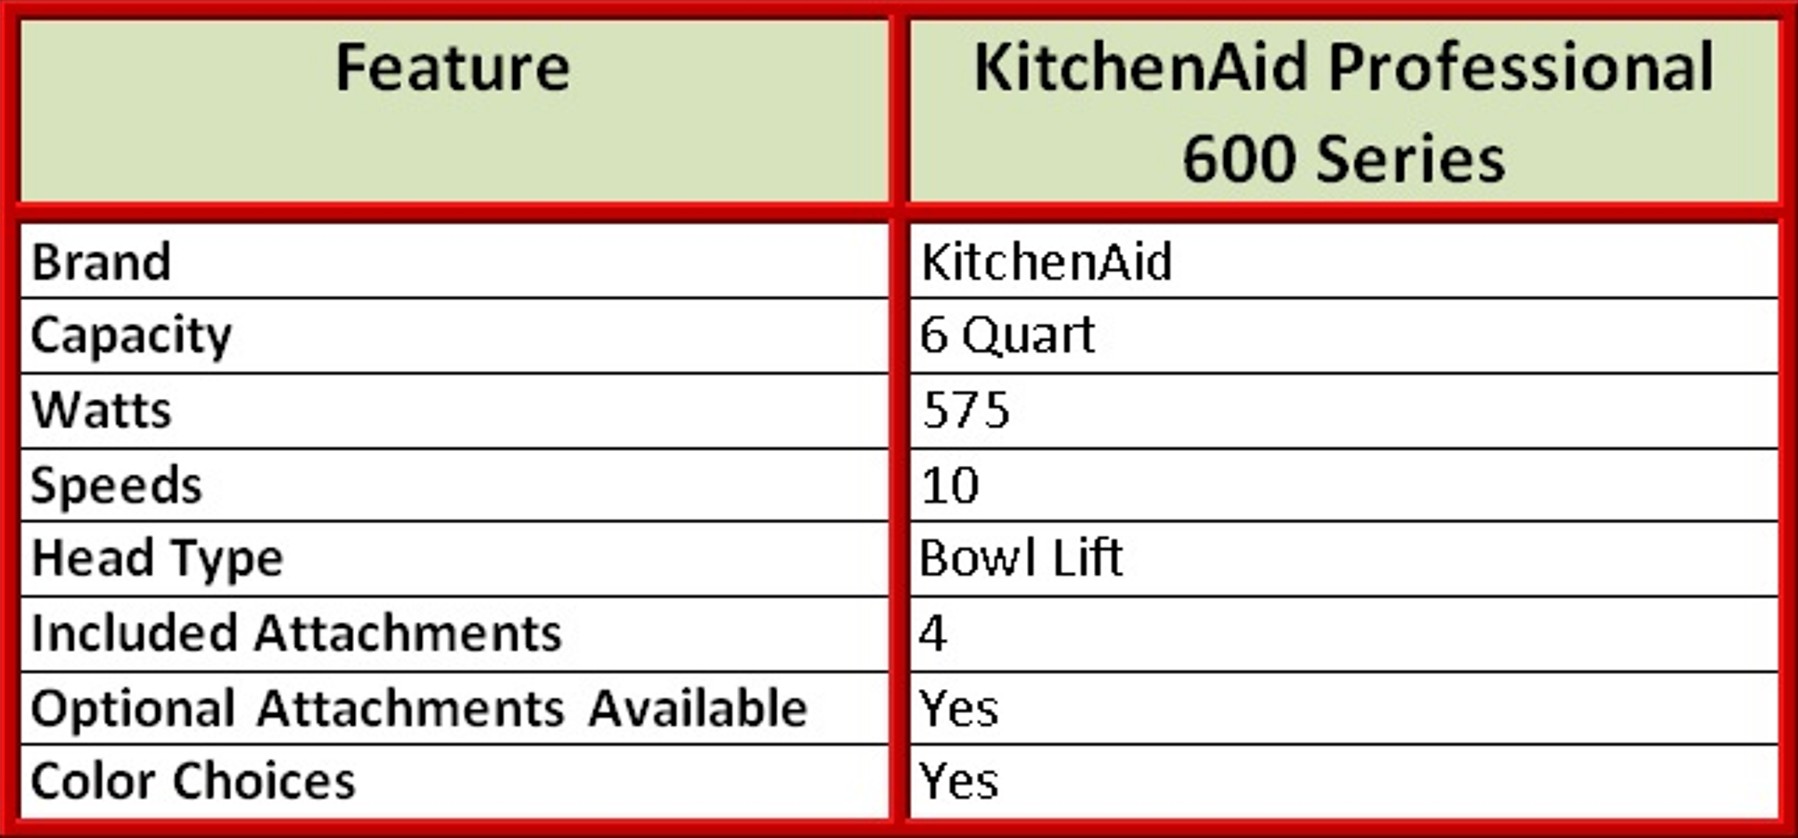 KitchenAid Professional 600 Series Features